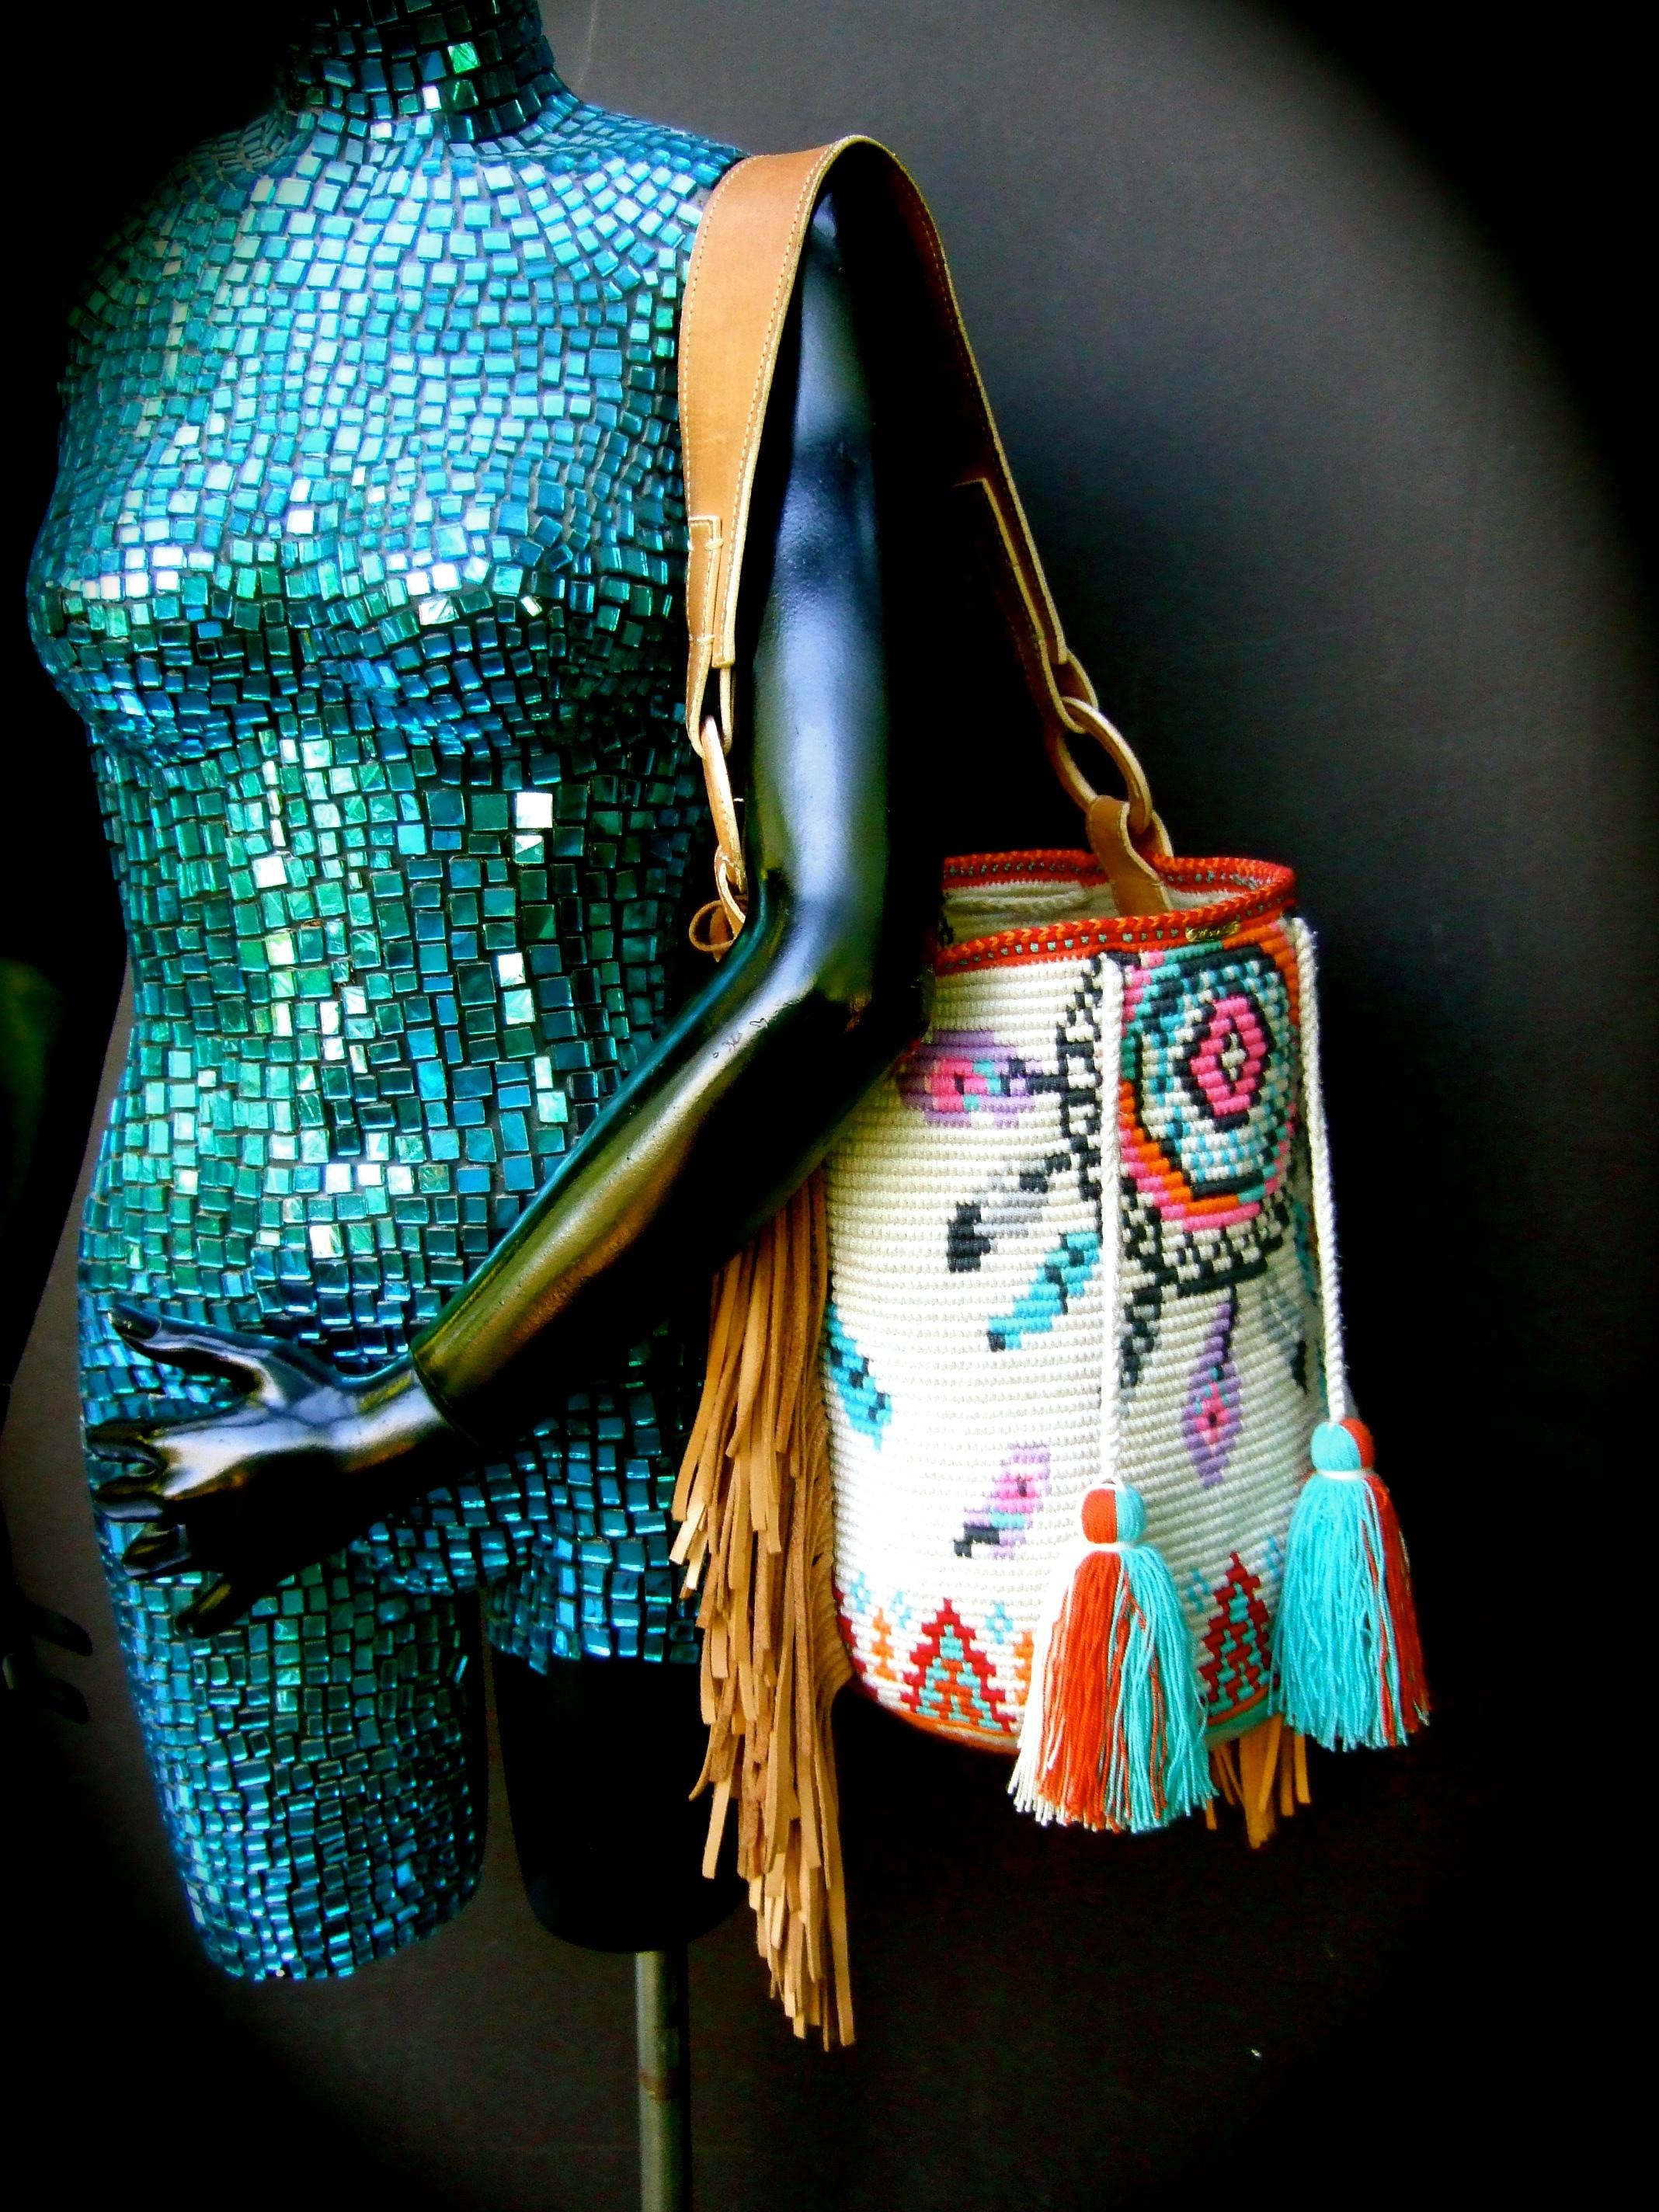  Handmade Woven Wool Knit Artisan Bucket Shoulder Bag c 1990s For Sale 8